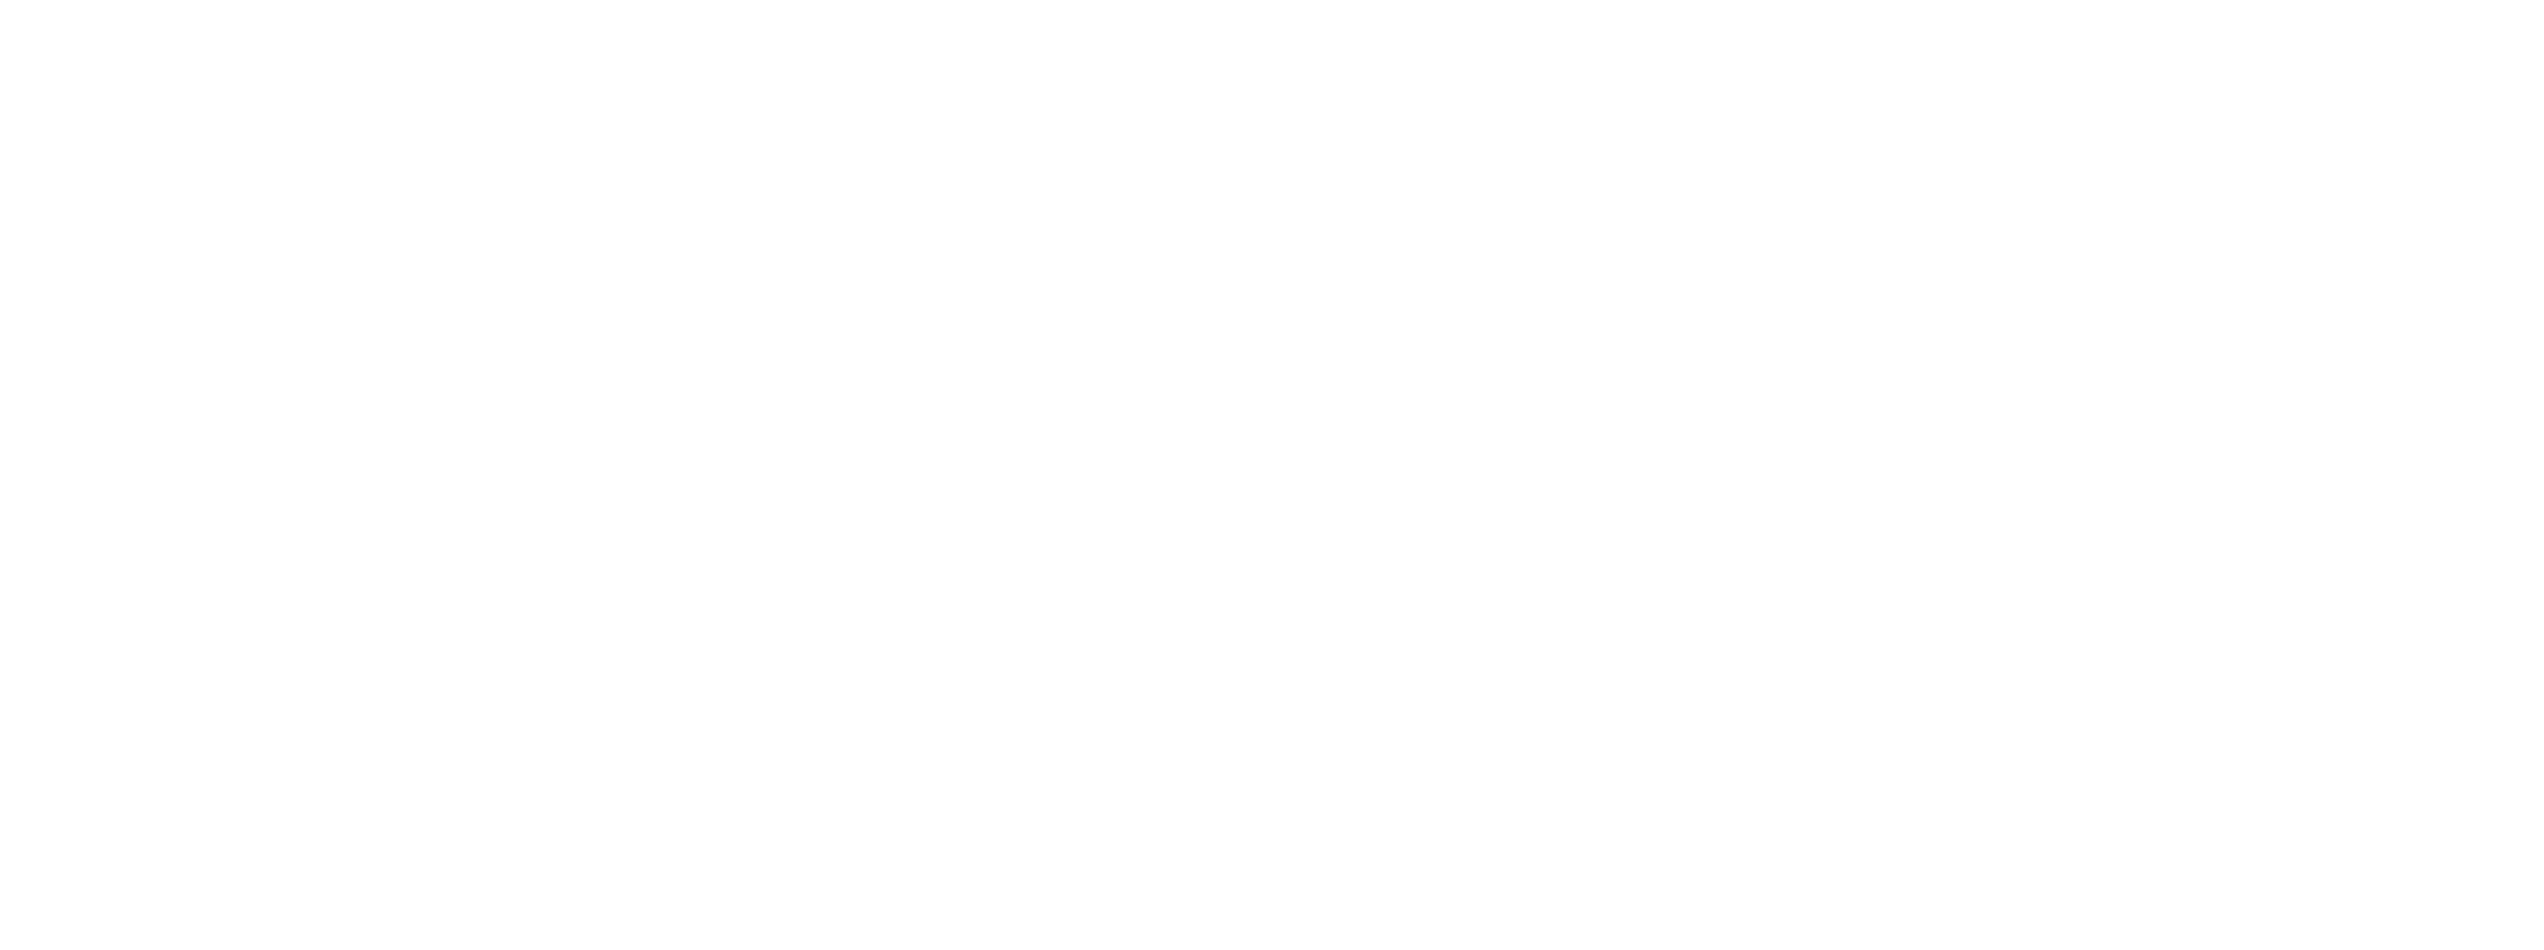 The Safe Harbor Foundation